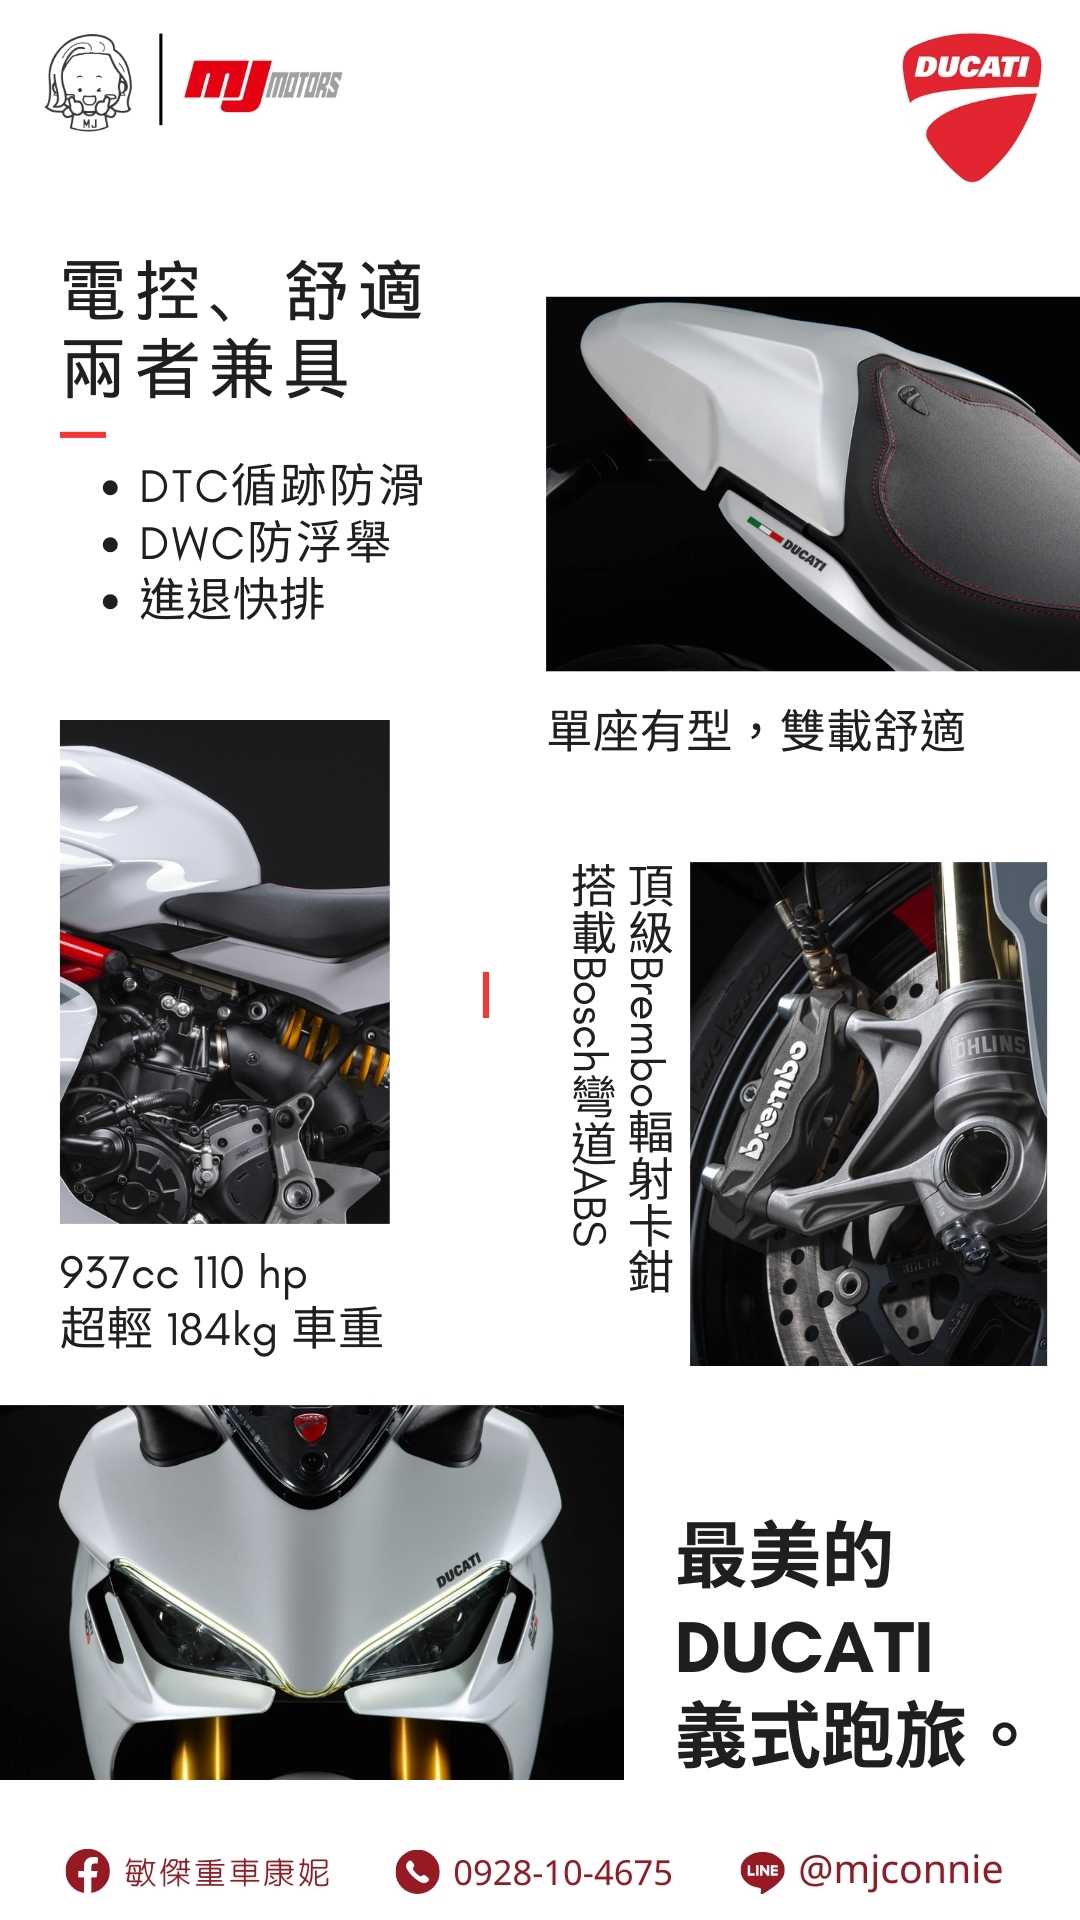 DUCATI SuperSport S新車出售中 『敏傑康妮』Ducati SuperSport S 指定年式~全額72期零利率~~好康優惠趁現在!!售價99.8萬元 | 敏傑車業資深銷售專員 康妮 Connie